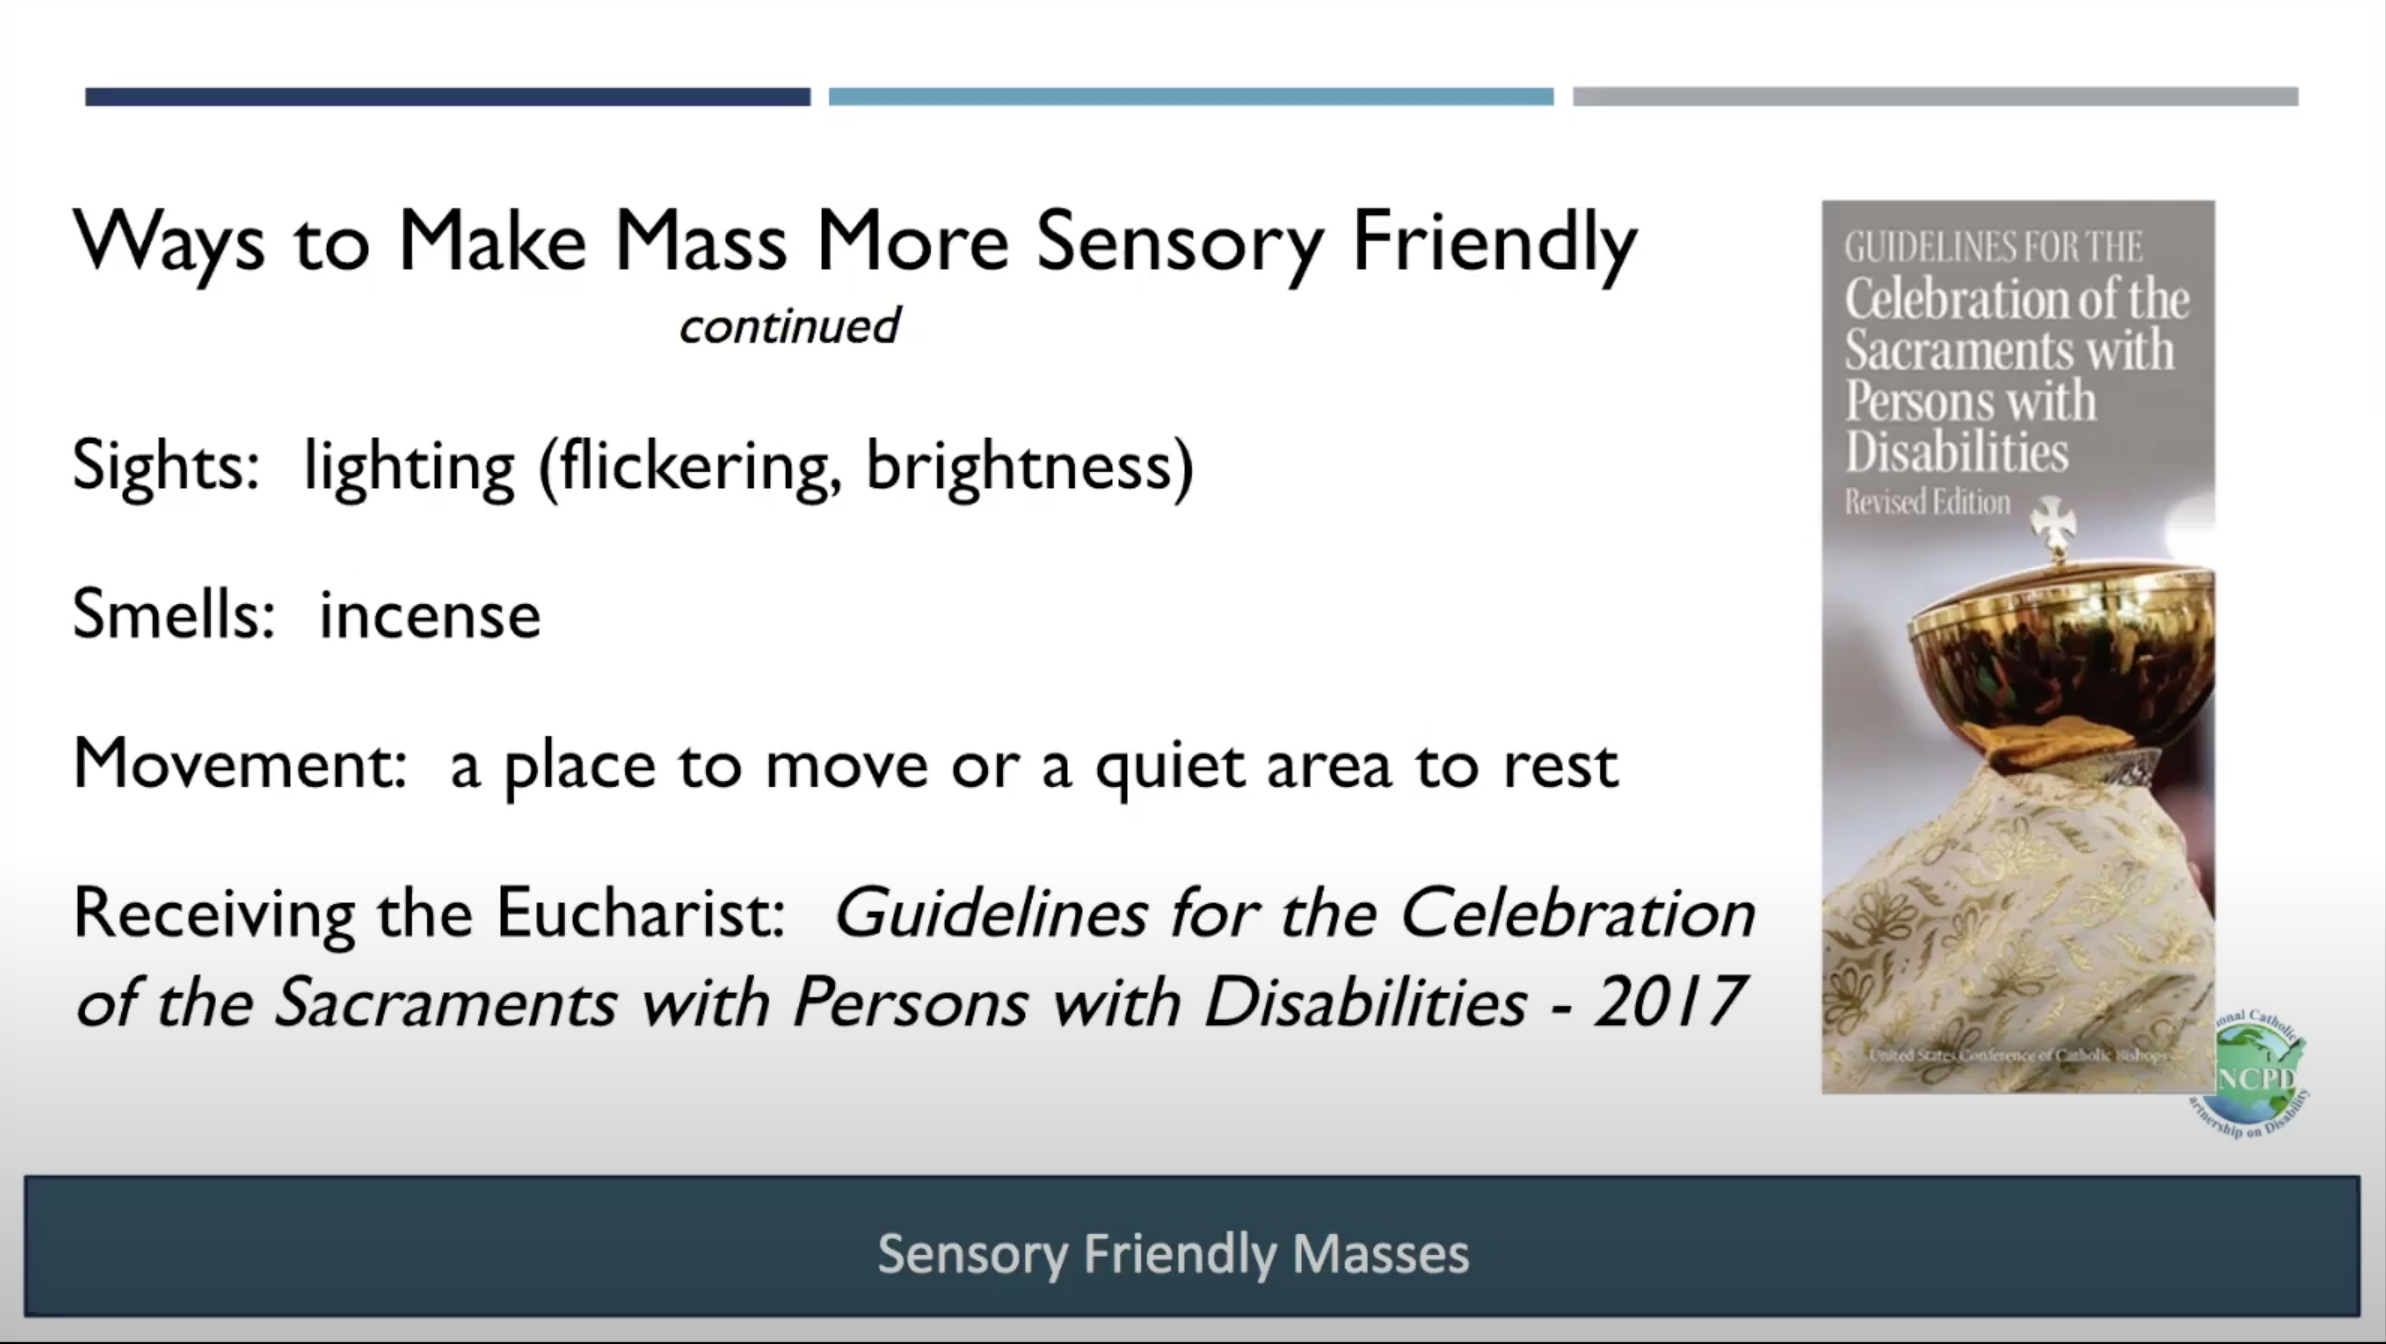 Examples of ways to make Mass sensory friendly